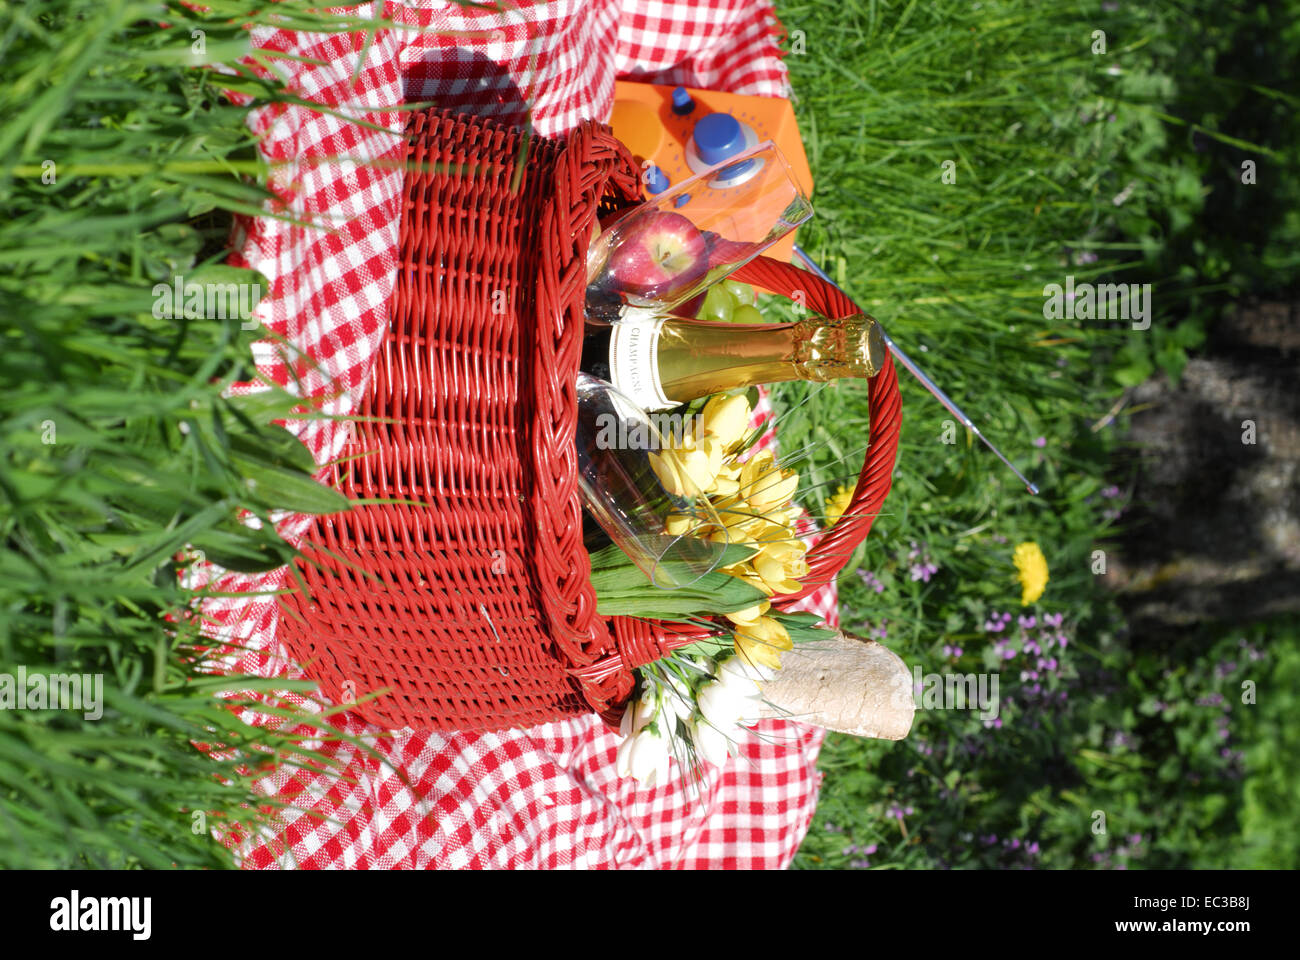 Picknick-Korb Stockfoto